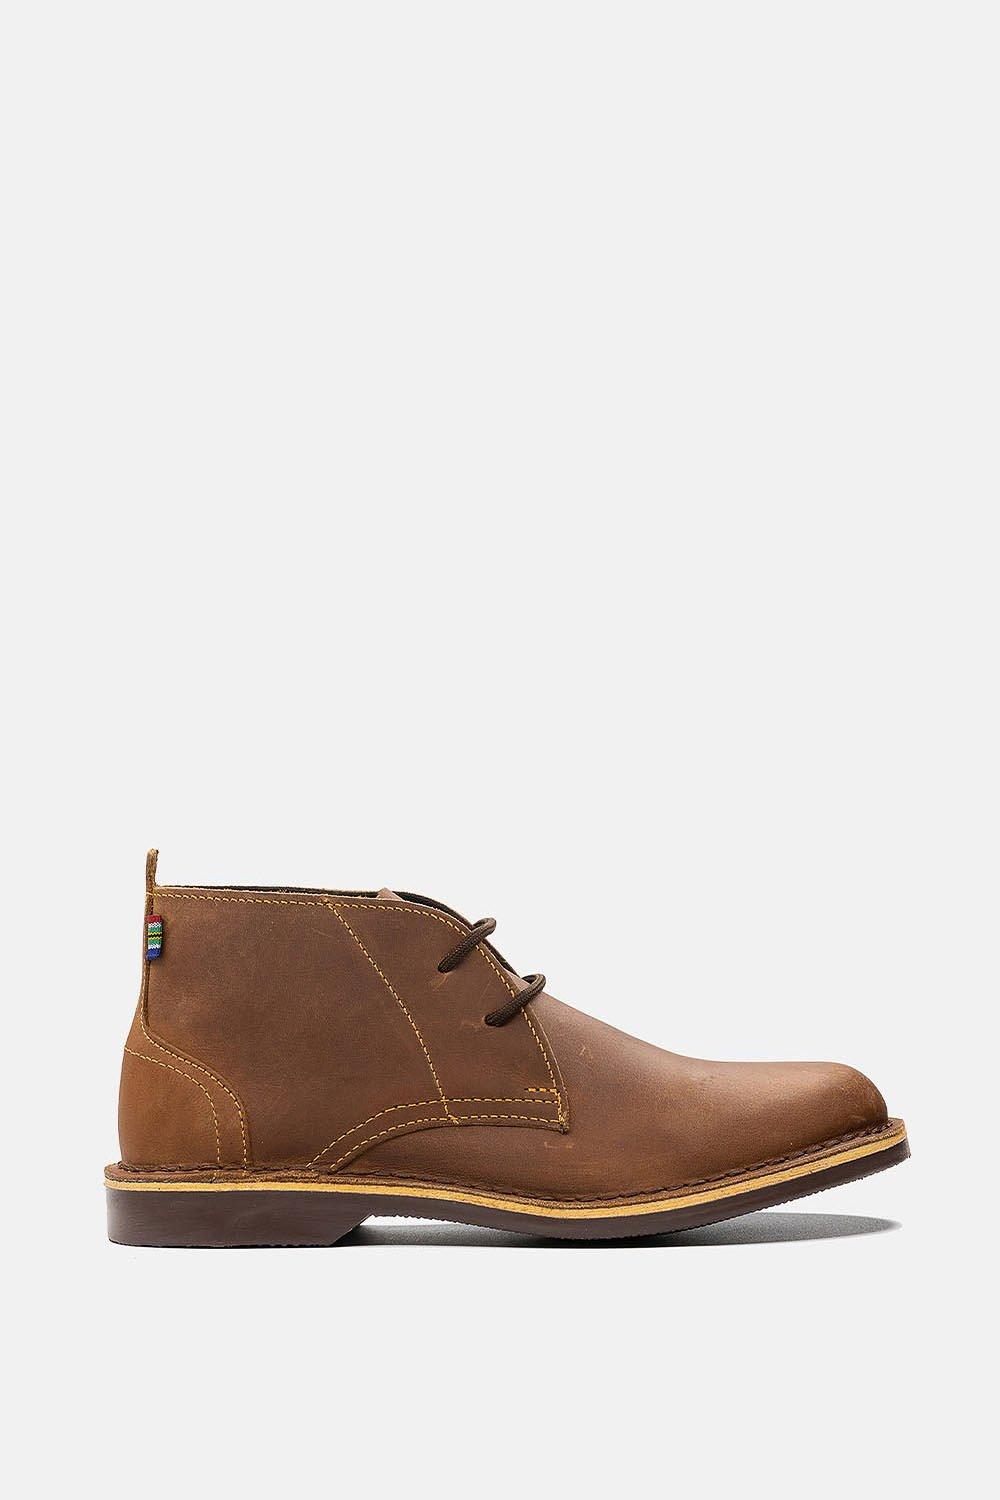 цена Кожаные ботинки чукка Veldskoen Shoes, коричневый